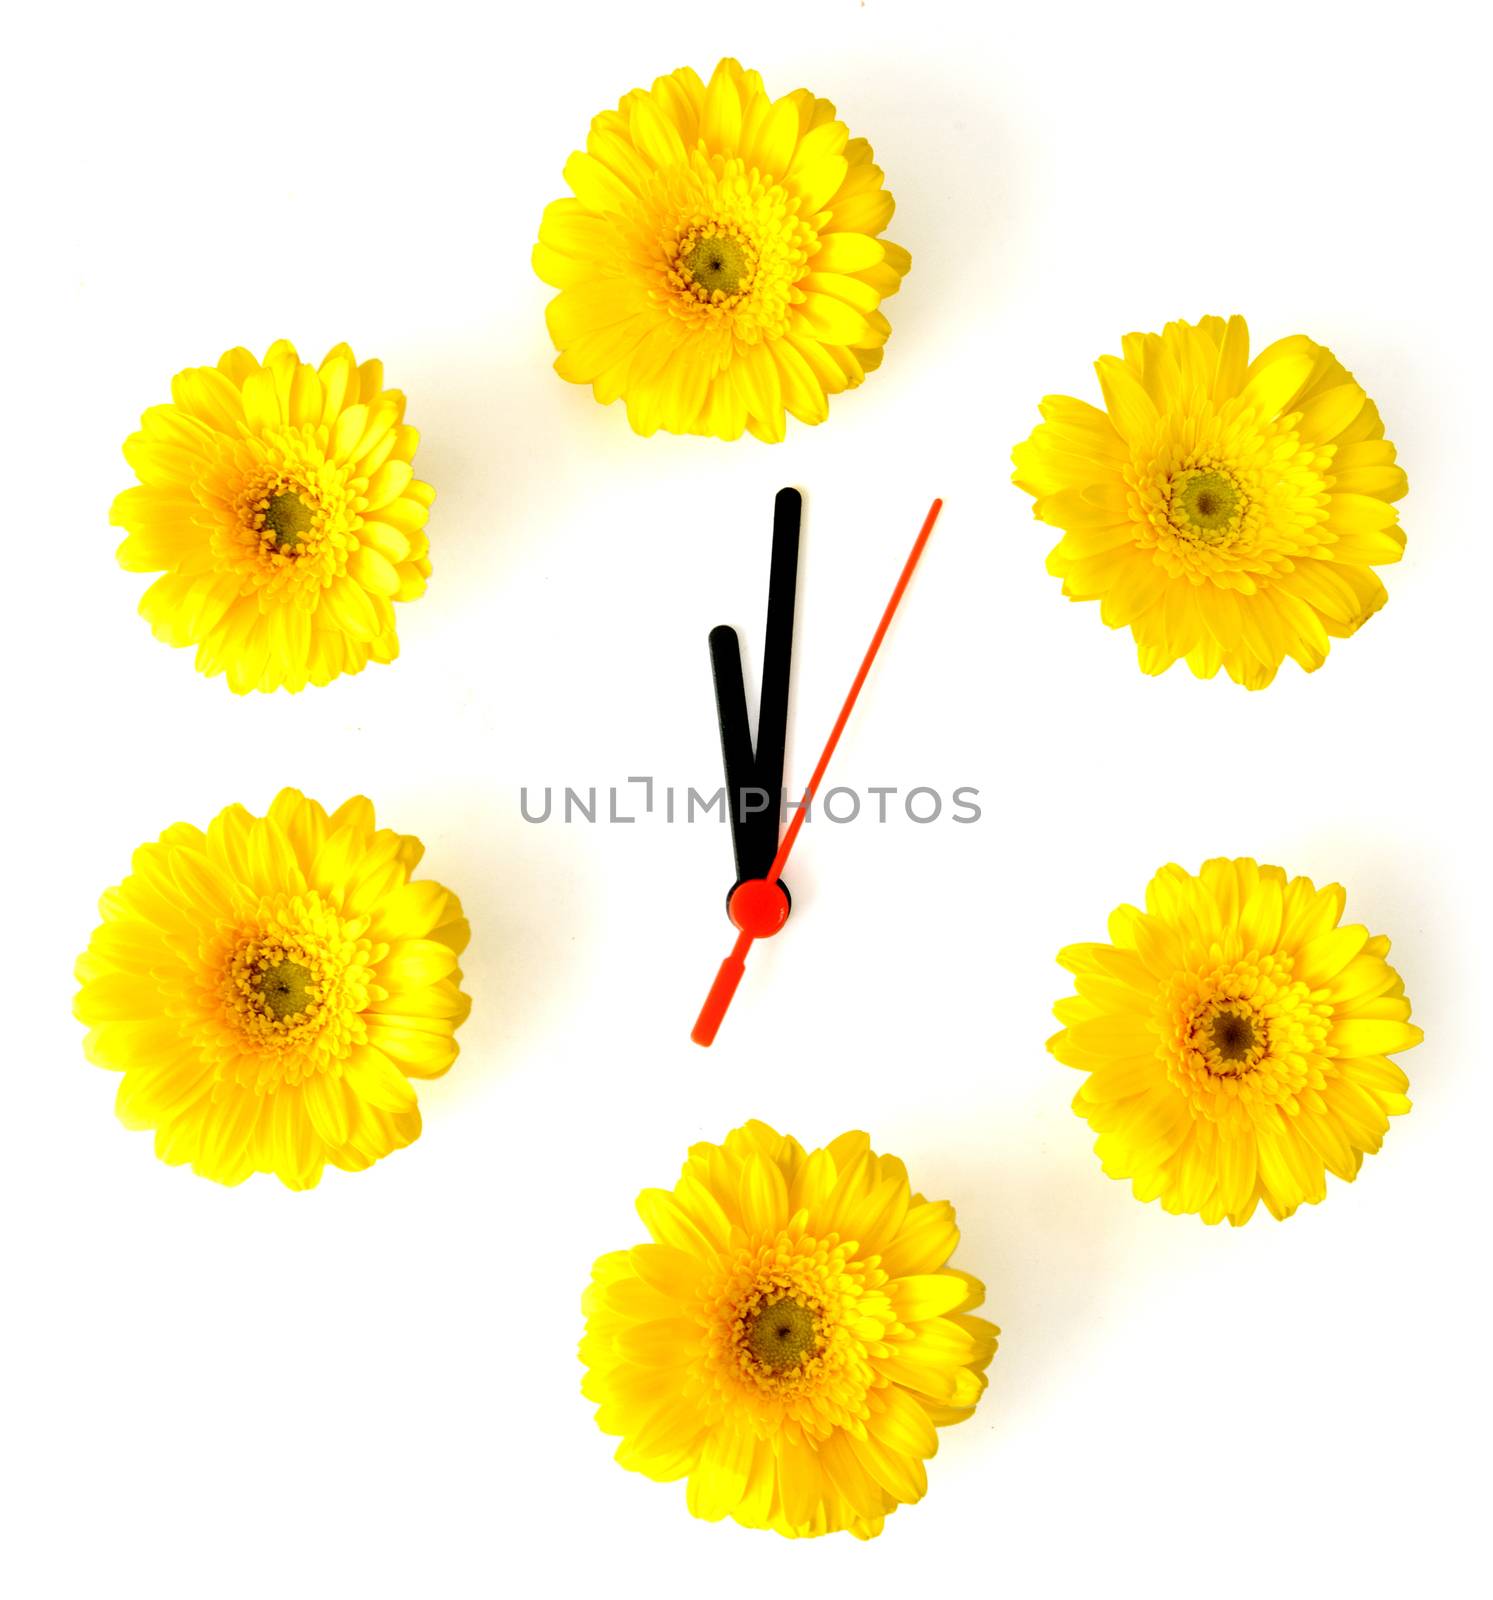 Spring clock  by unikpix